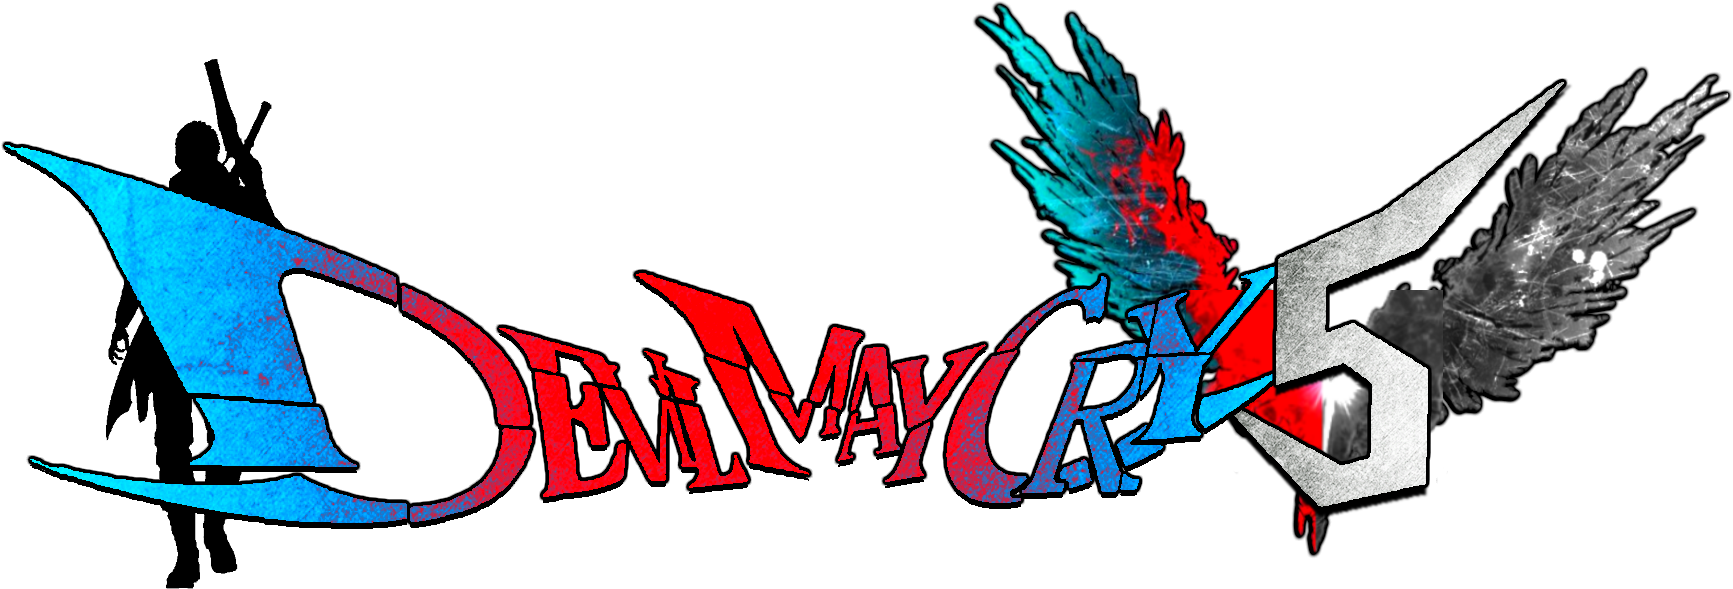 Devil May Cry Logo Transparent